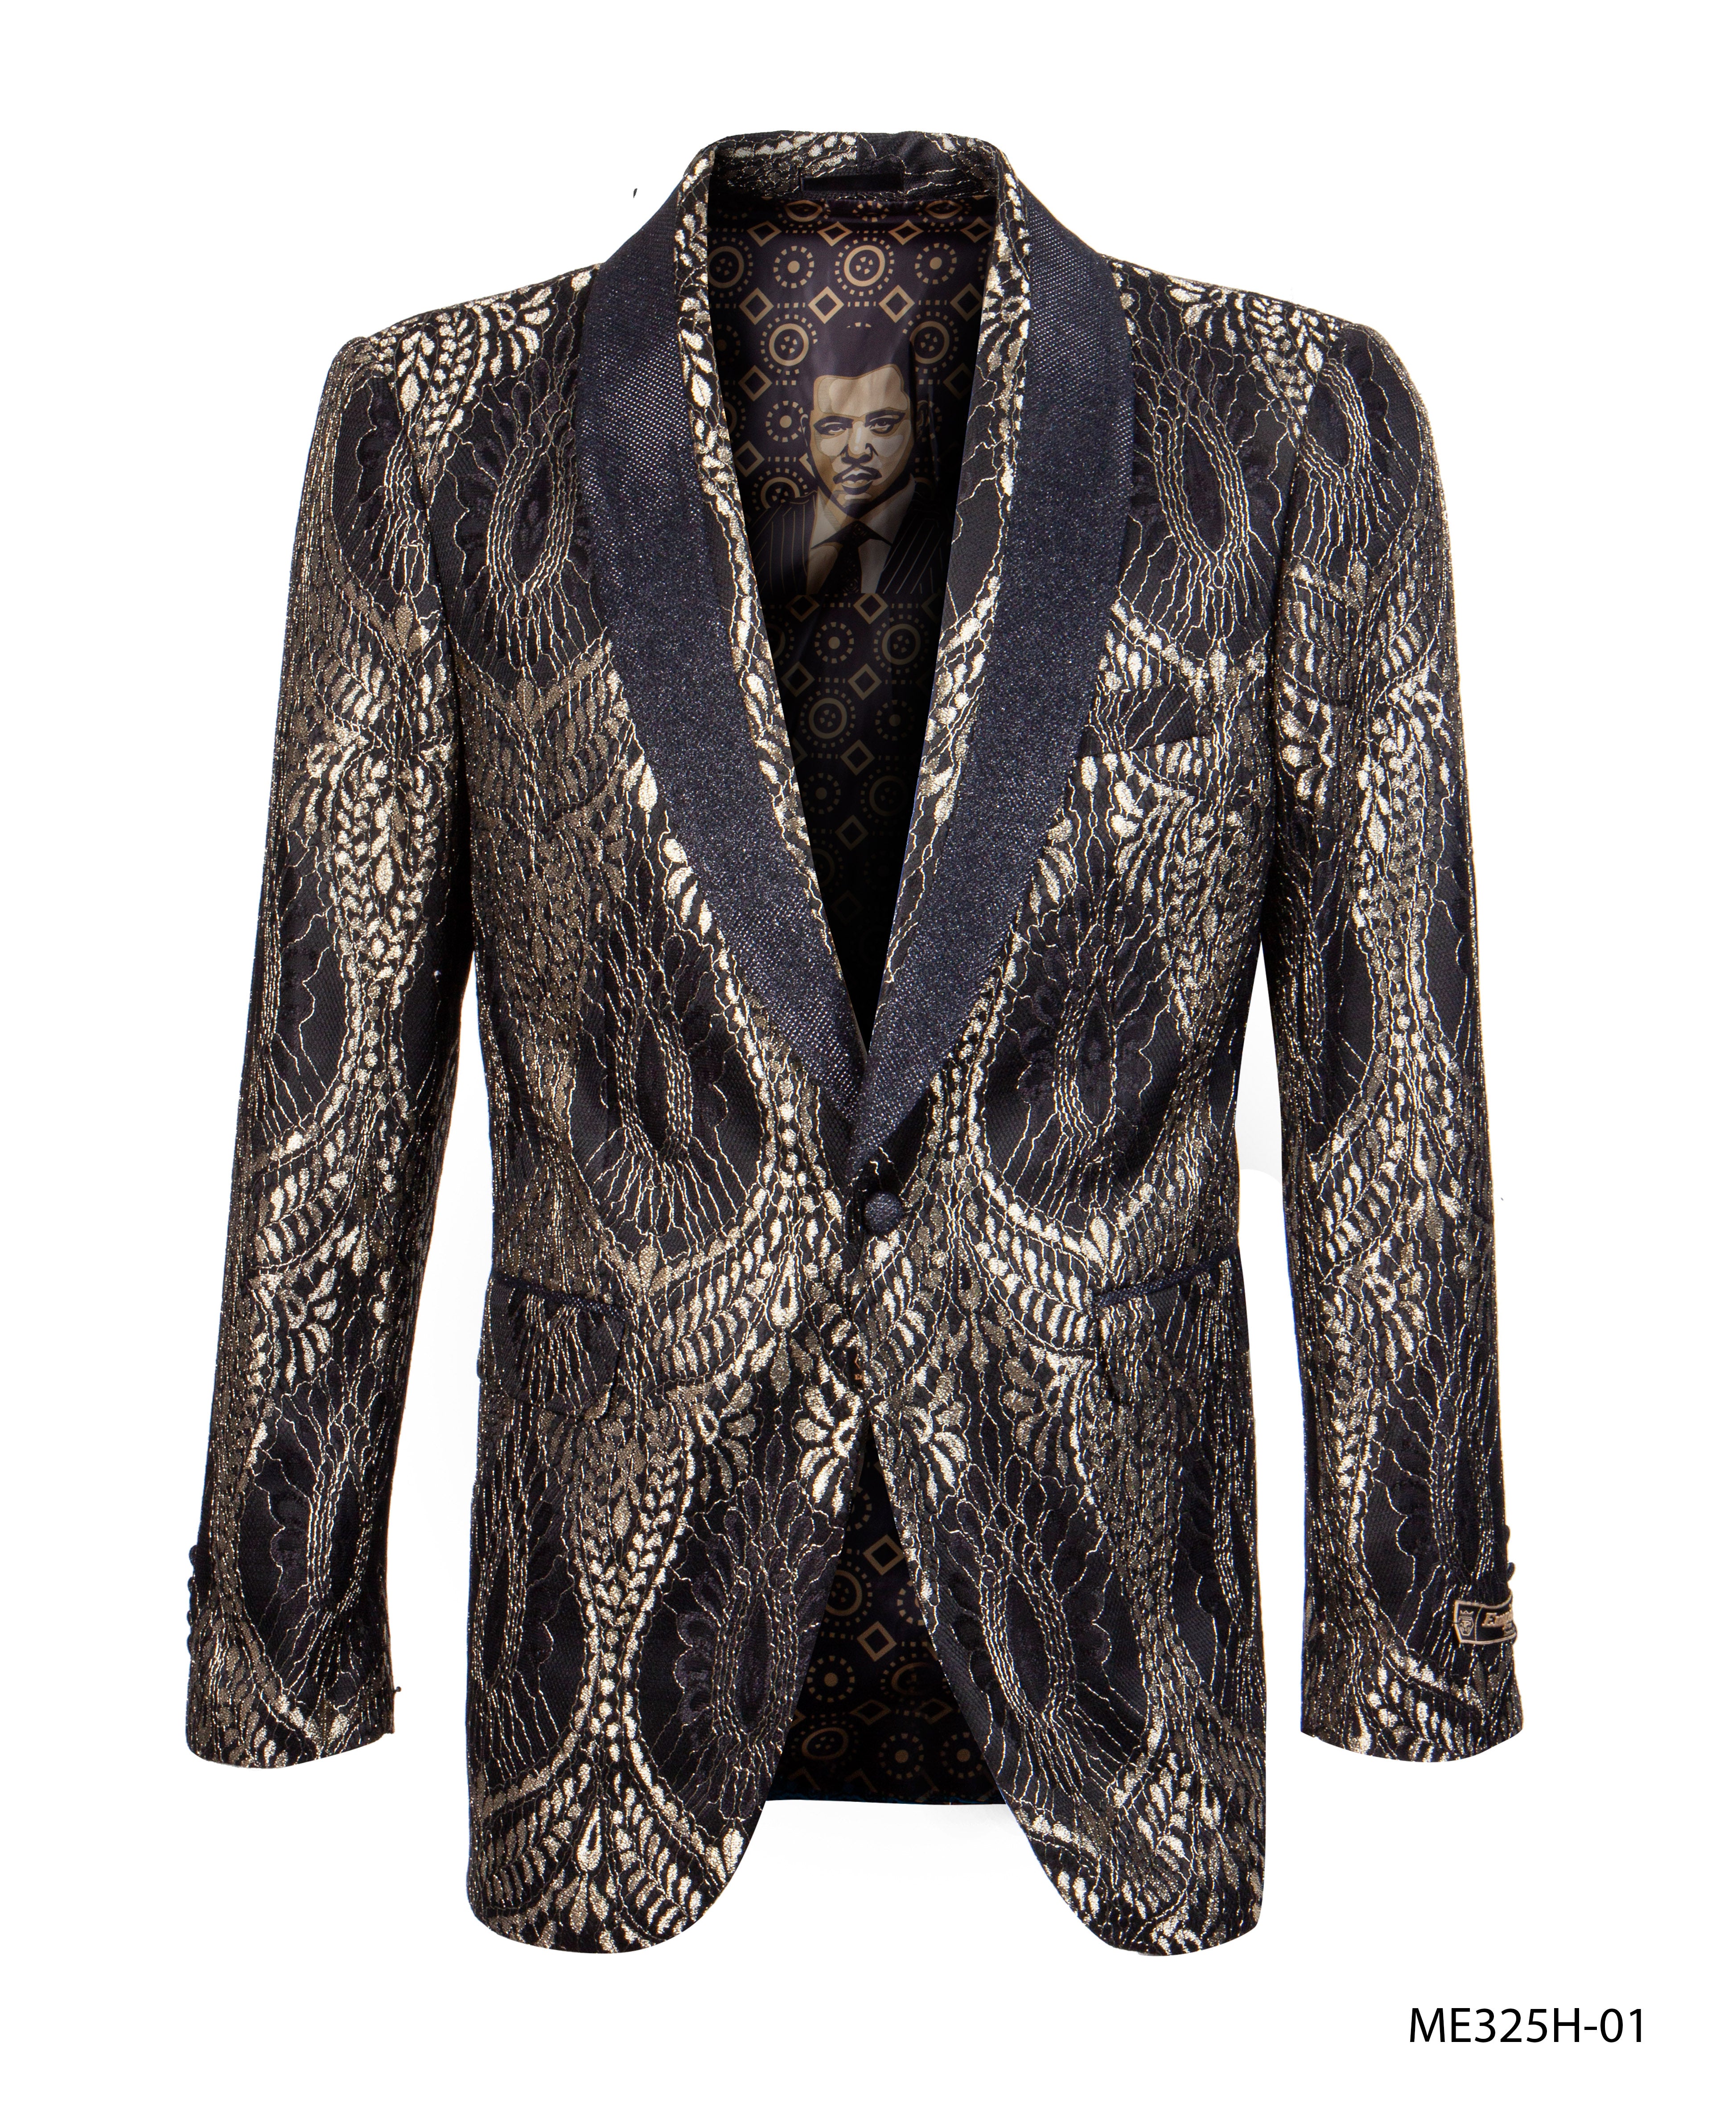 Black/Gold Empire Show Blazers Formal Dinner Suit Jackets For Men ME325H-01